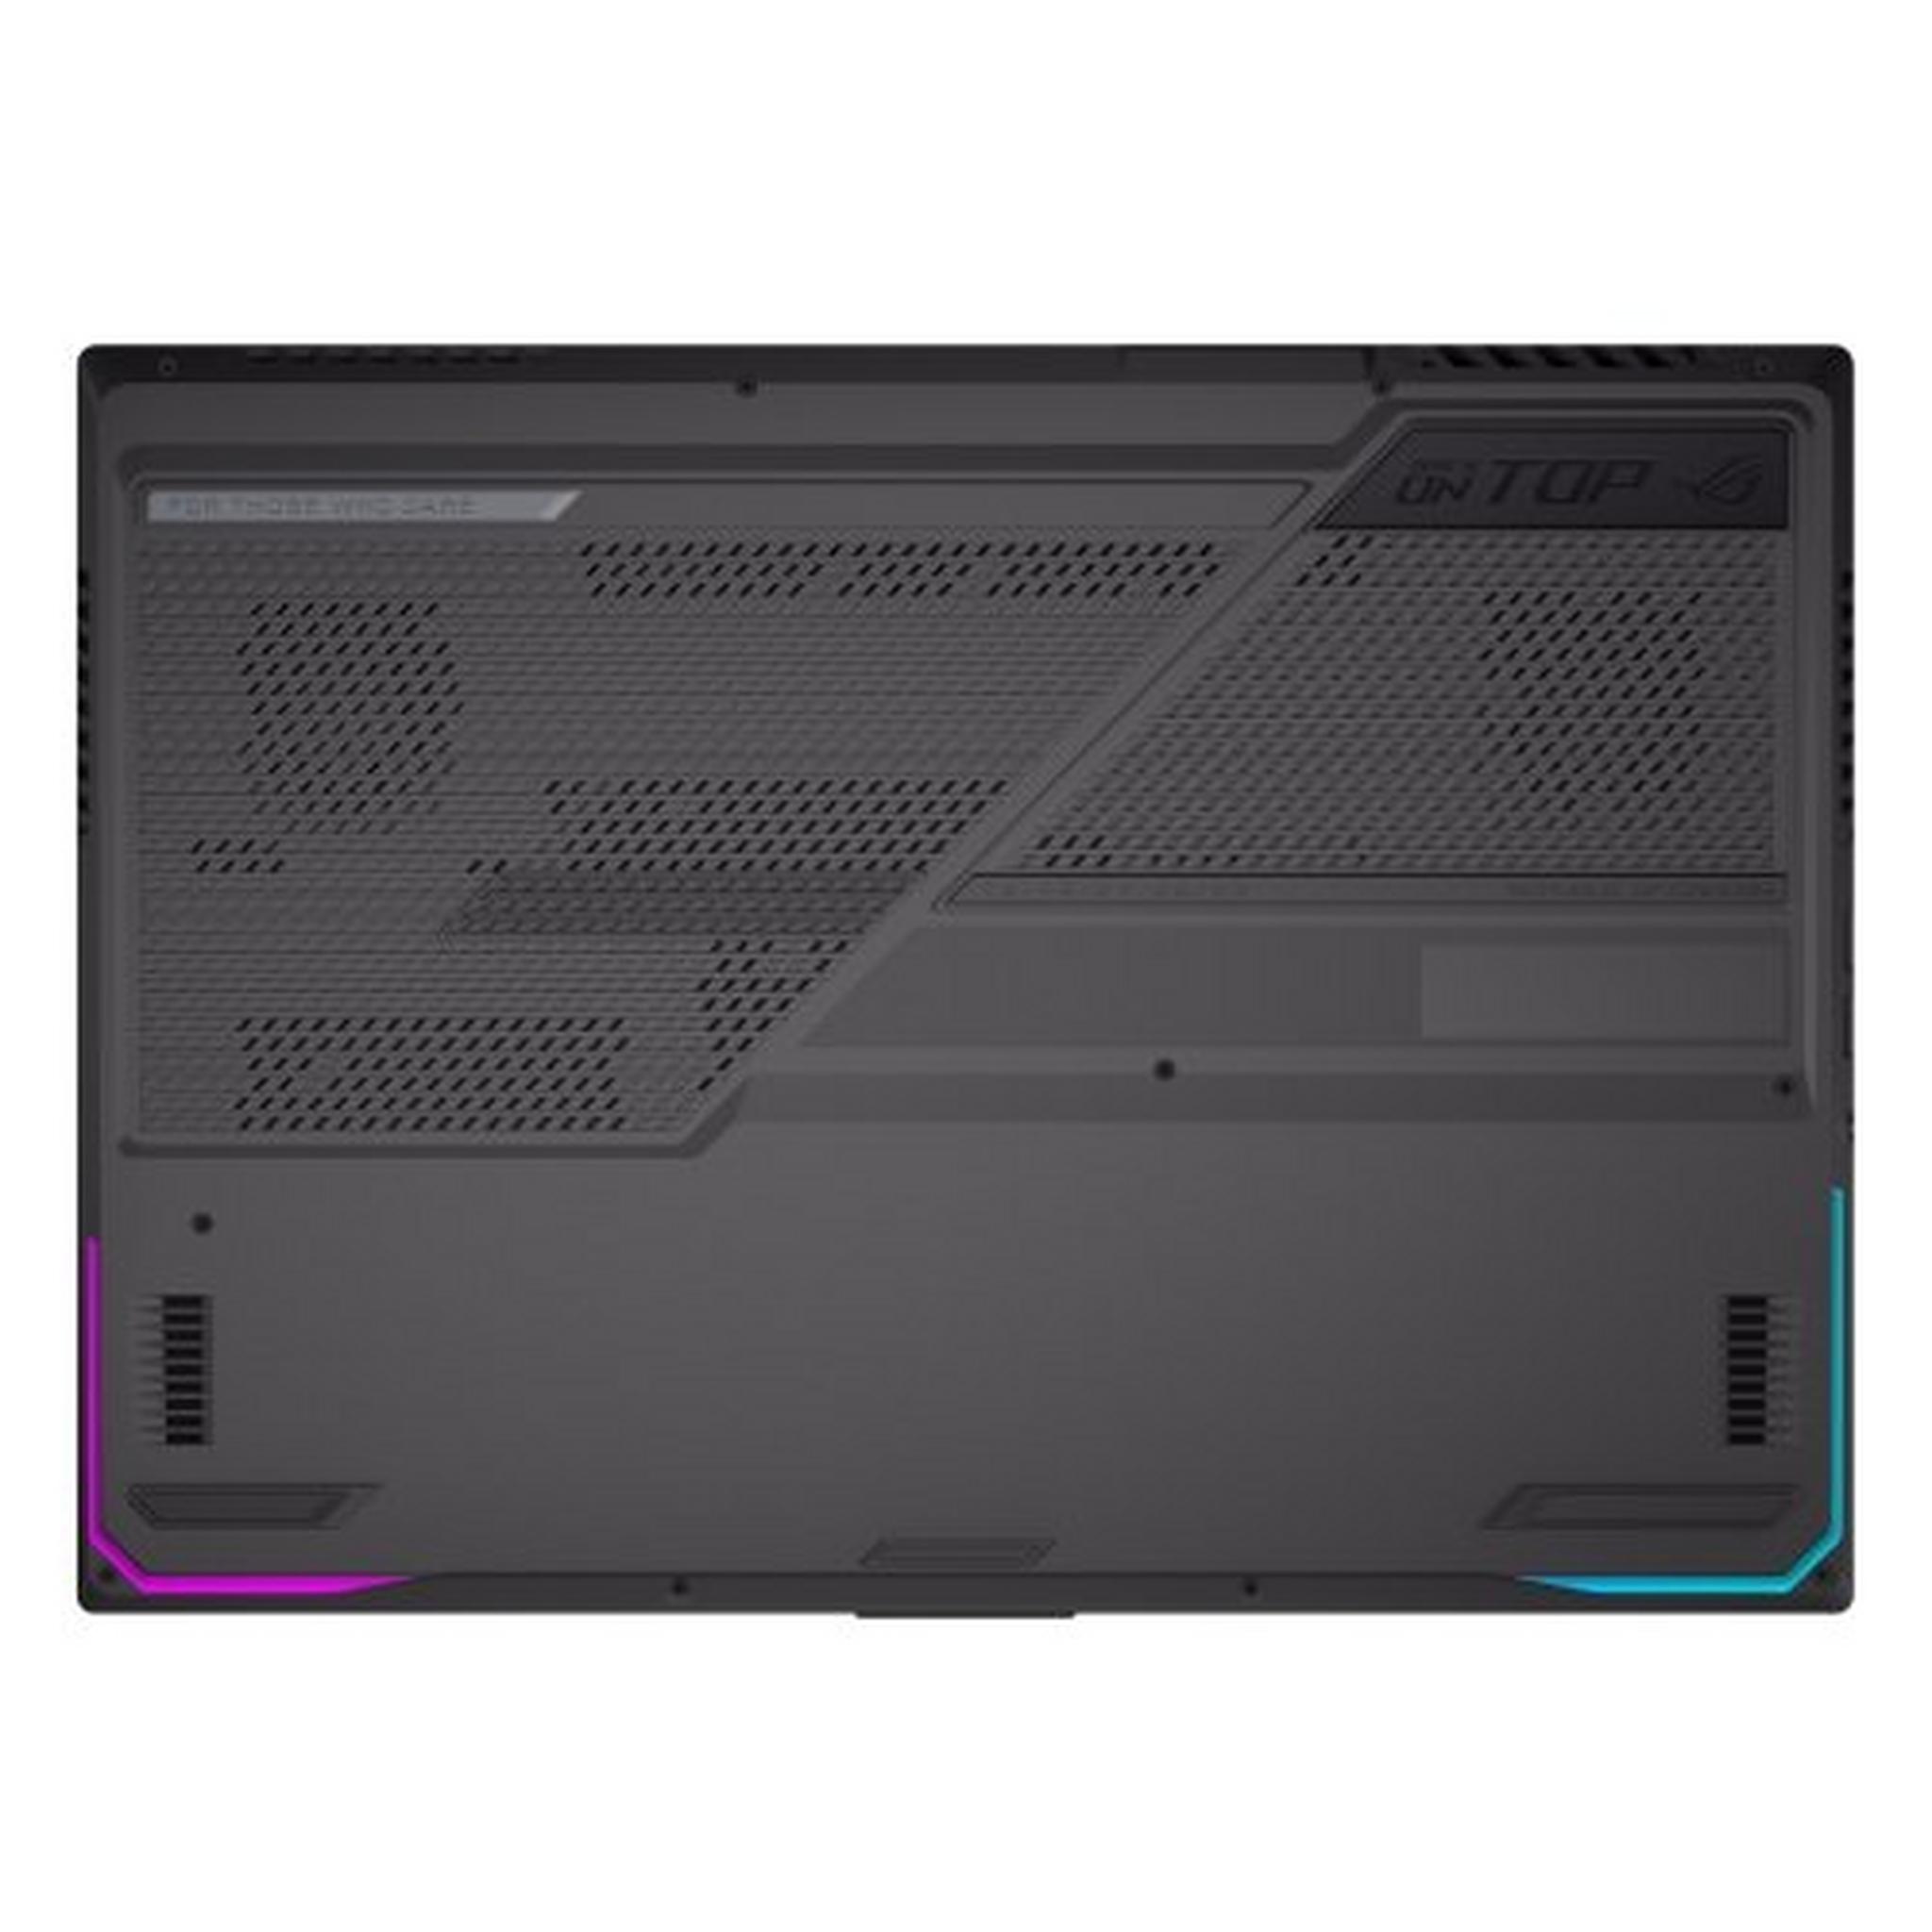 Asus Rog Strix G17 (2021), AMD Ryzen 7, Nvidia Geforce RTX 3060 6GB, RAM 16GB, SSD 1TB, 17.3" 144Hz Gaming Laptop - Eclipse Gray (G713QM-HX015T)